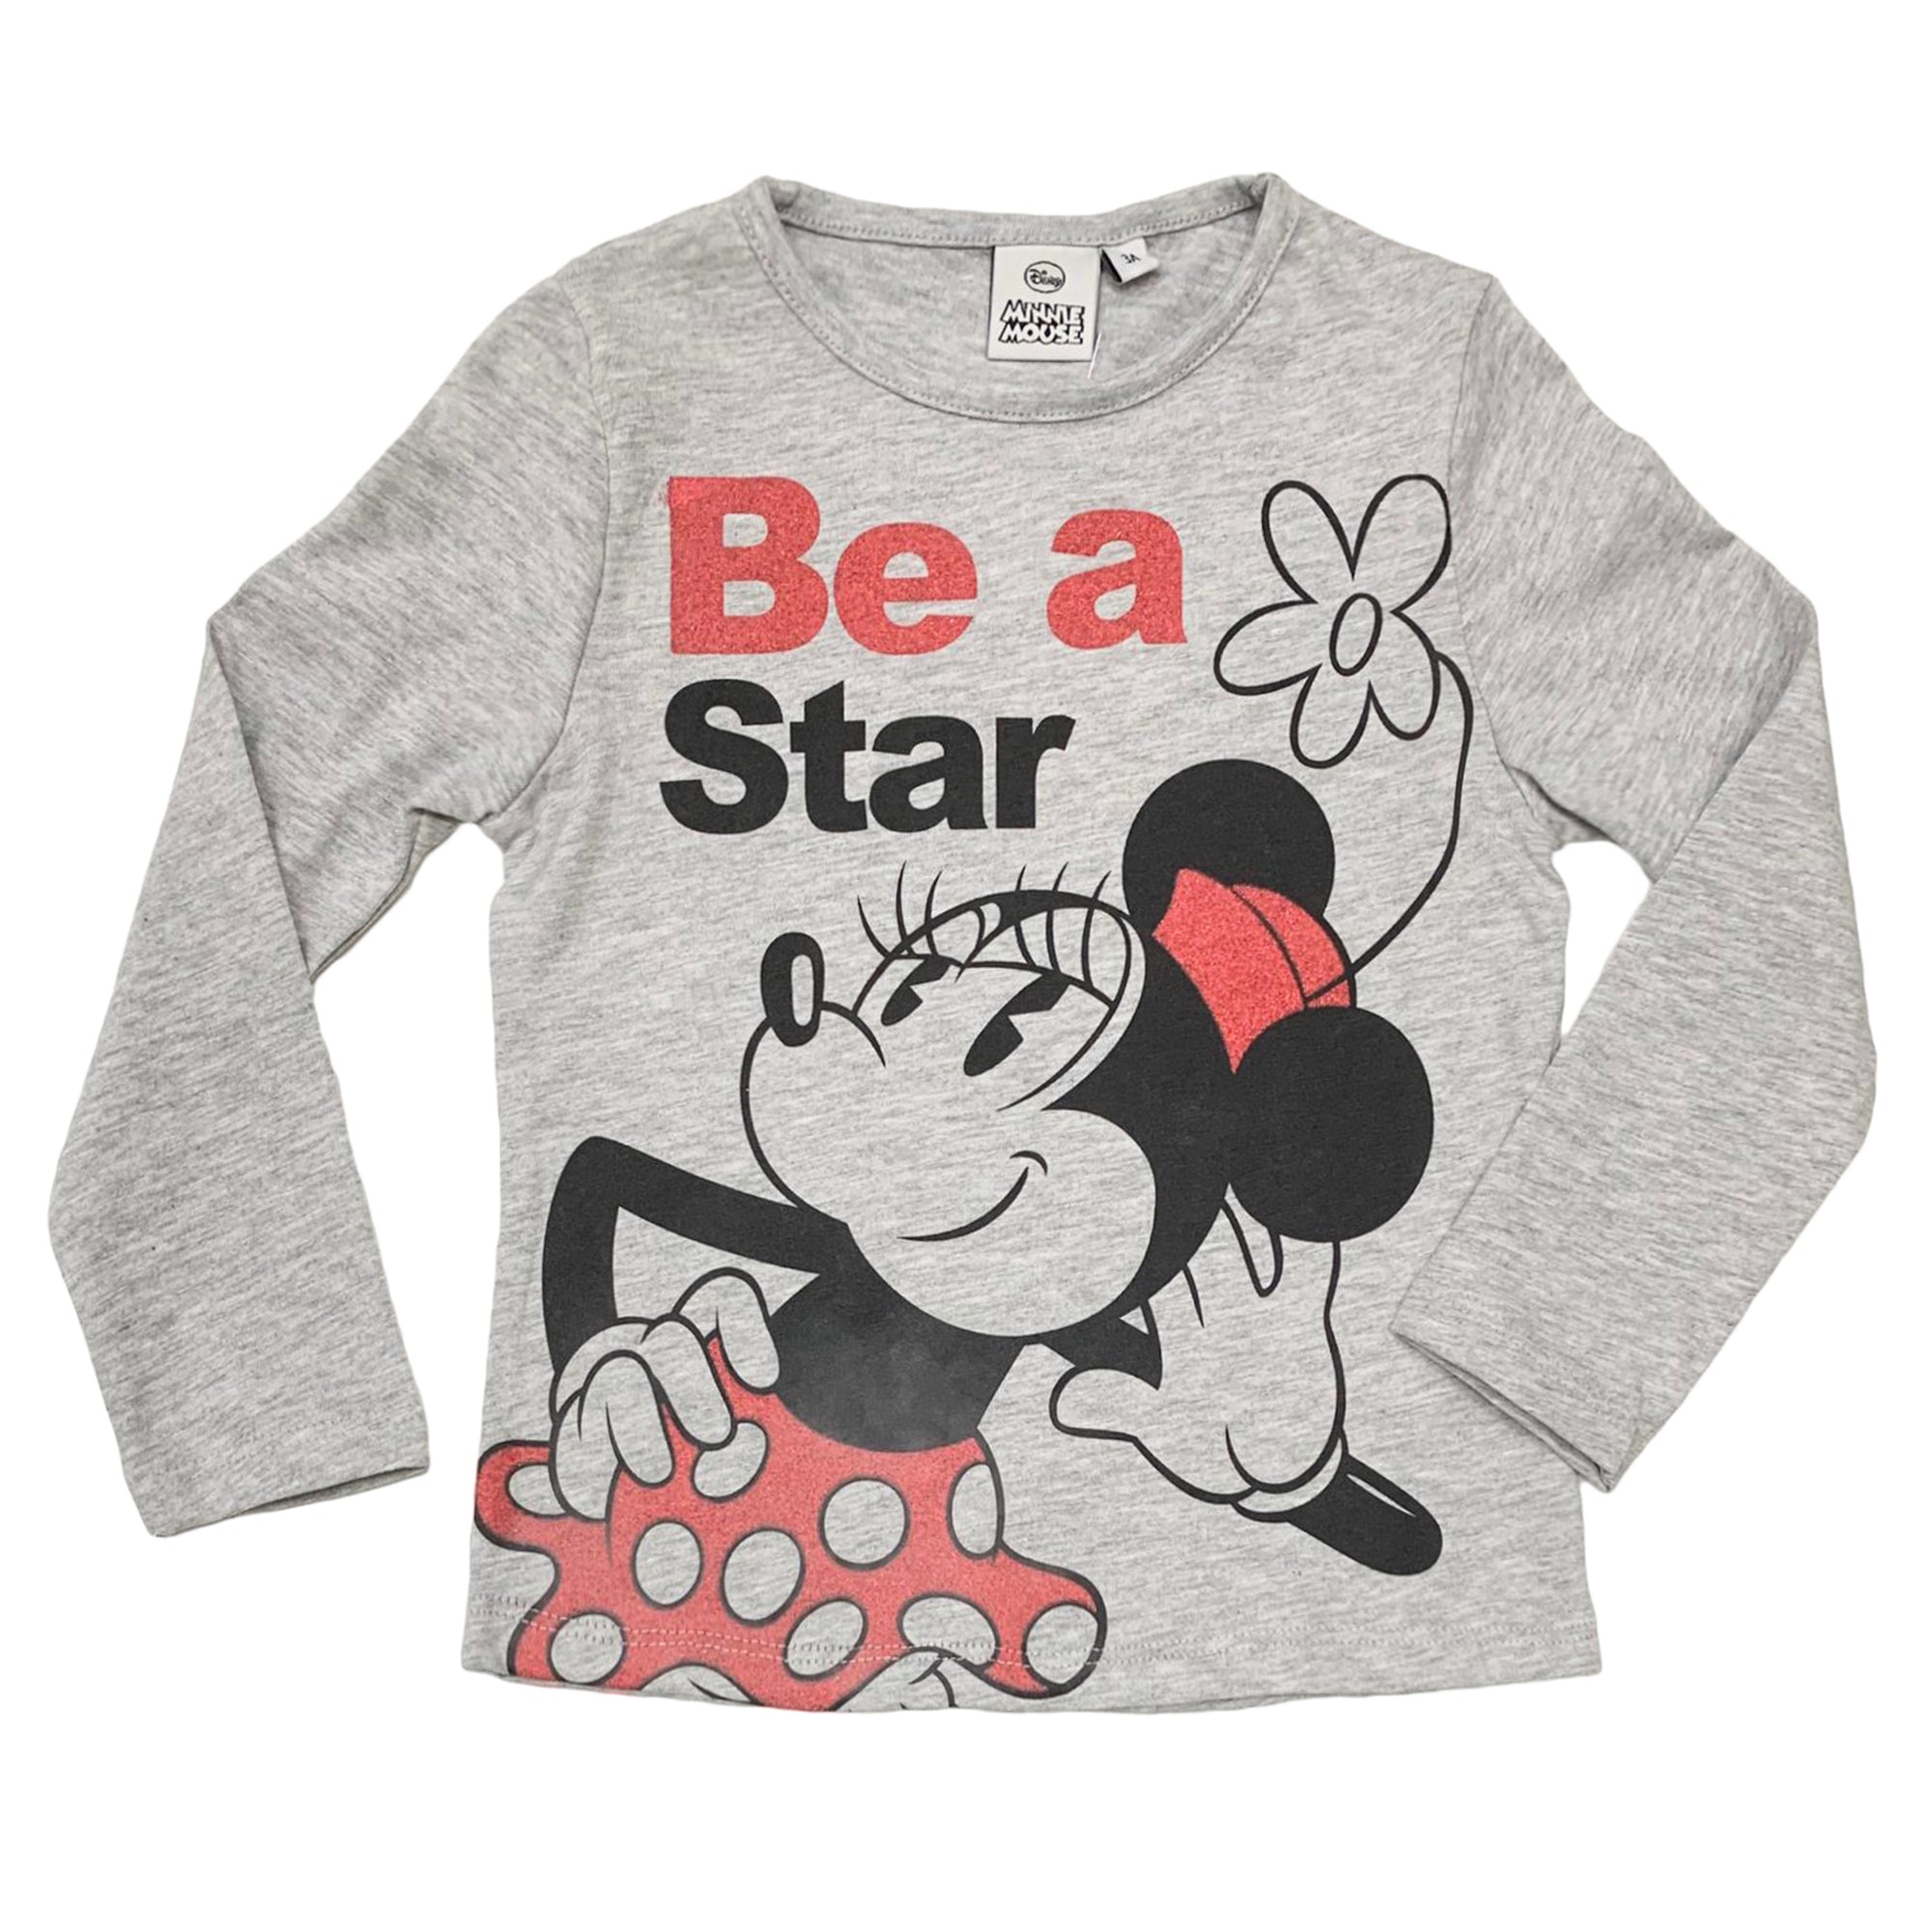 Maglietta maniche lunghe bambina ufficiale Disney Minnie Mouse originale 3328